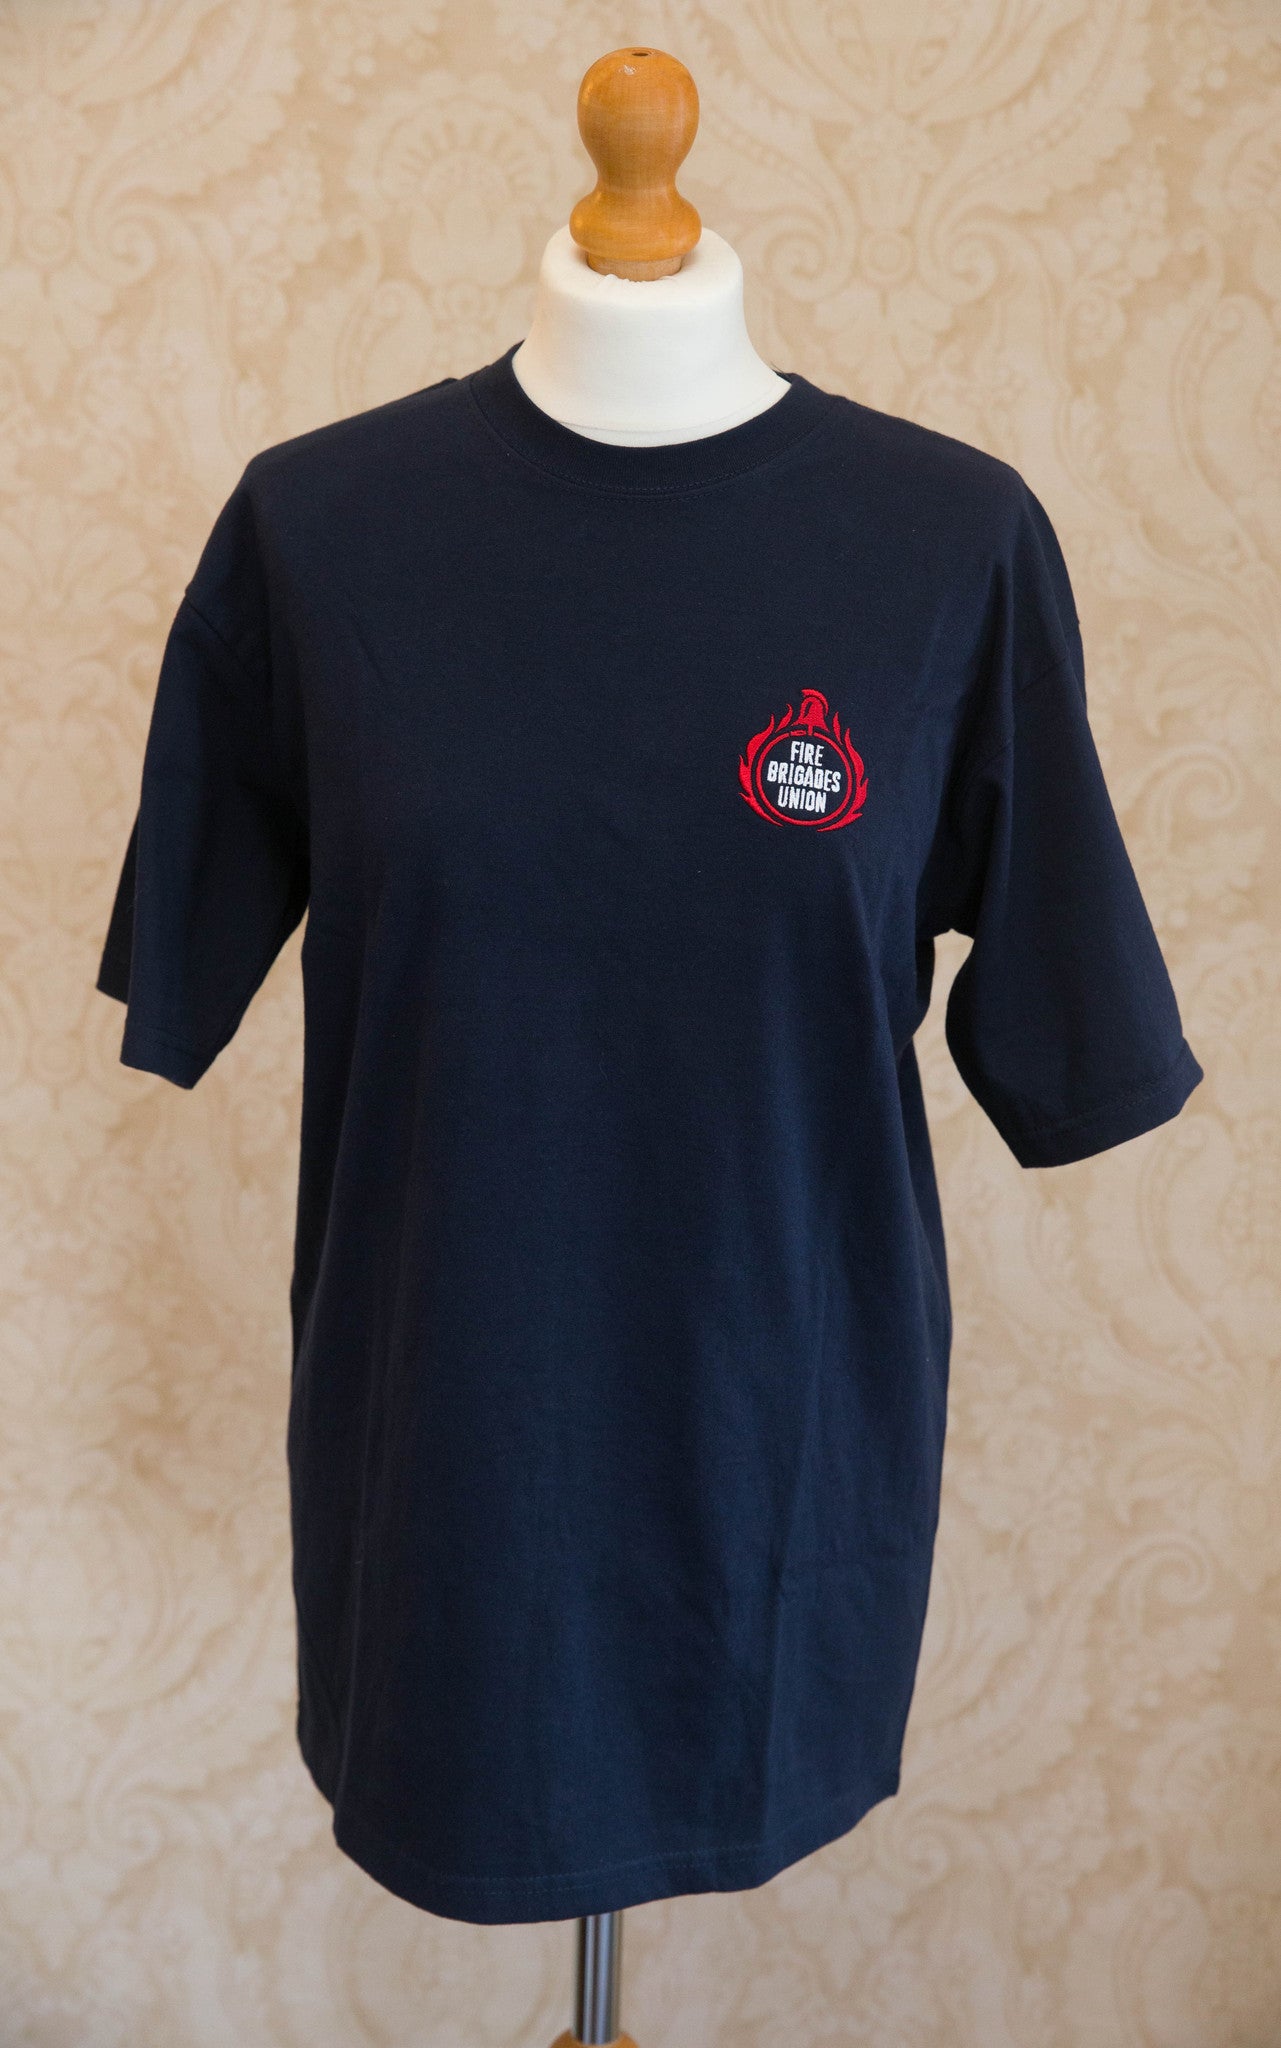 T-shirt | Buy Fire Brigades Union T-shirts